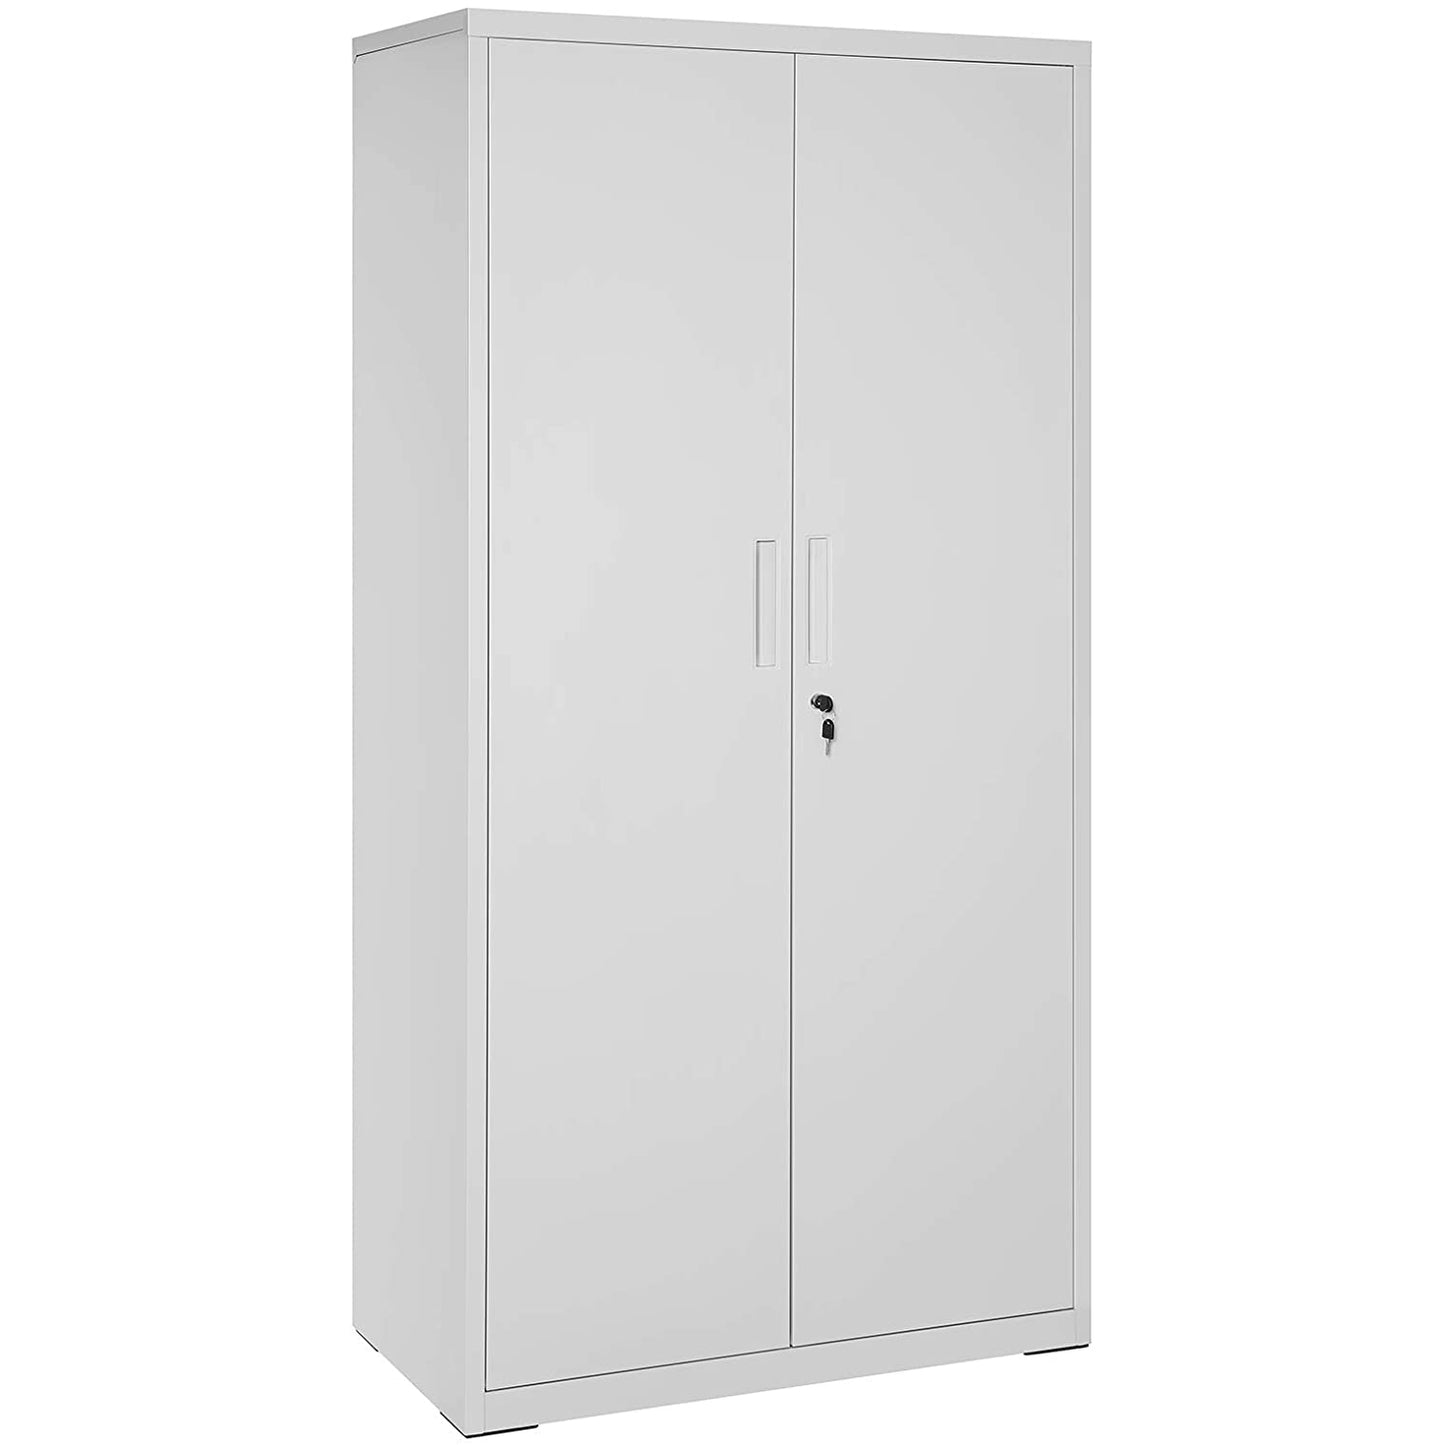 Nancy's Lenox Filing Cabinet - Office Cabinet - Storage Cabinet - 5 Shelves - Steel - Gray